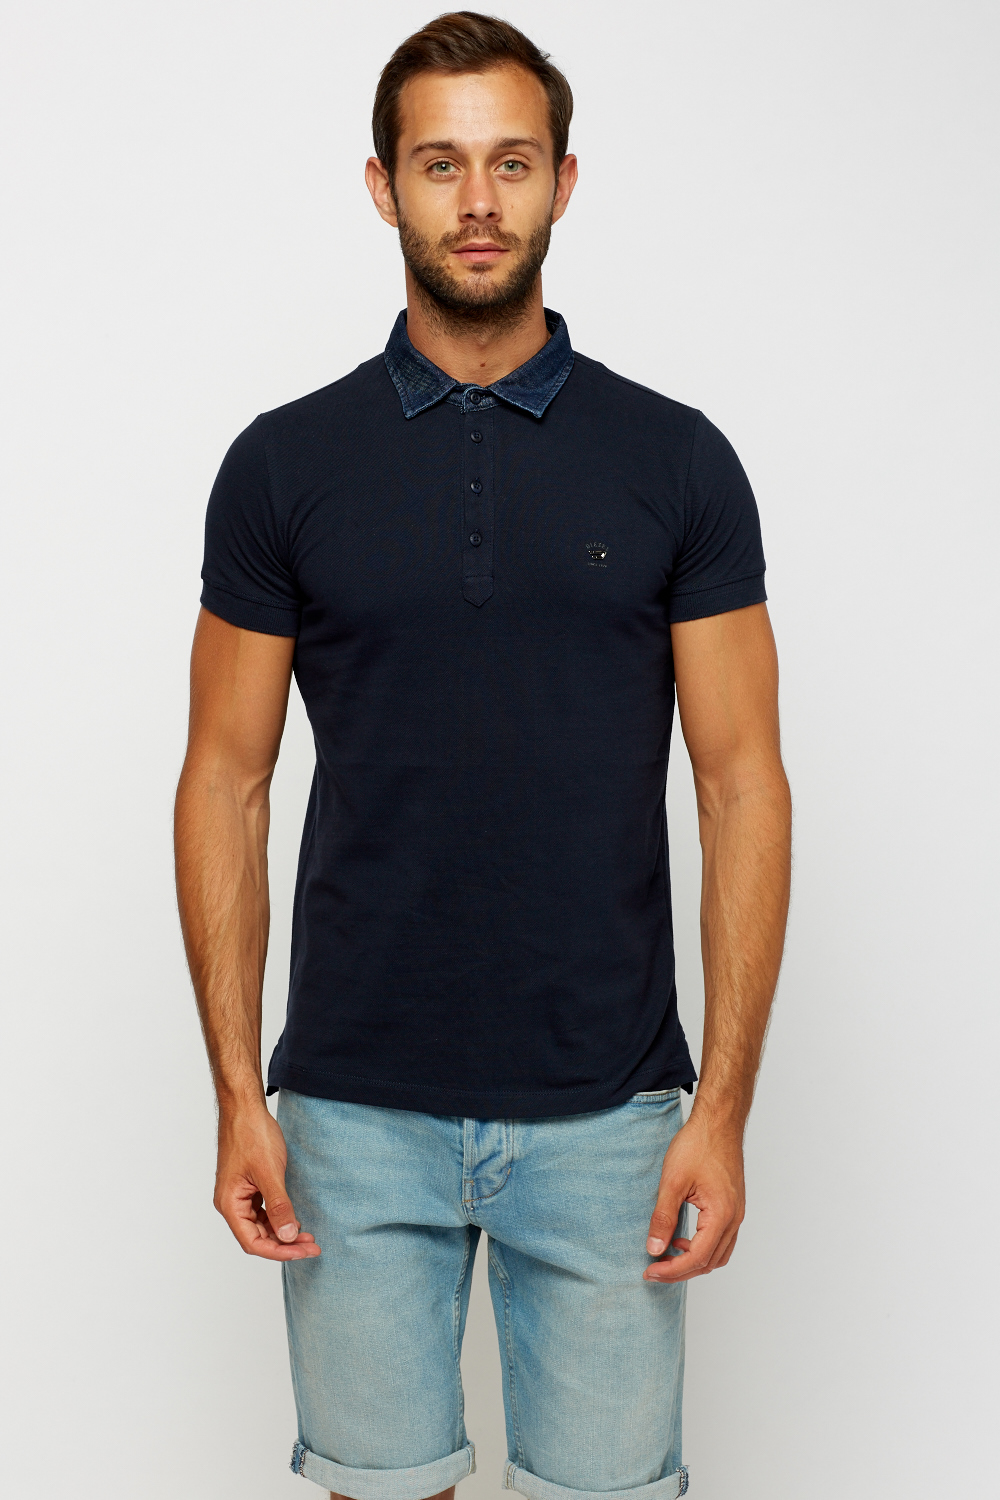 Diesel Denim Collar Polo T-Shirt - Limited edition | Discount Designer ...